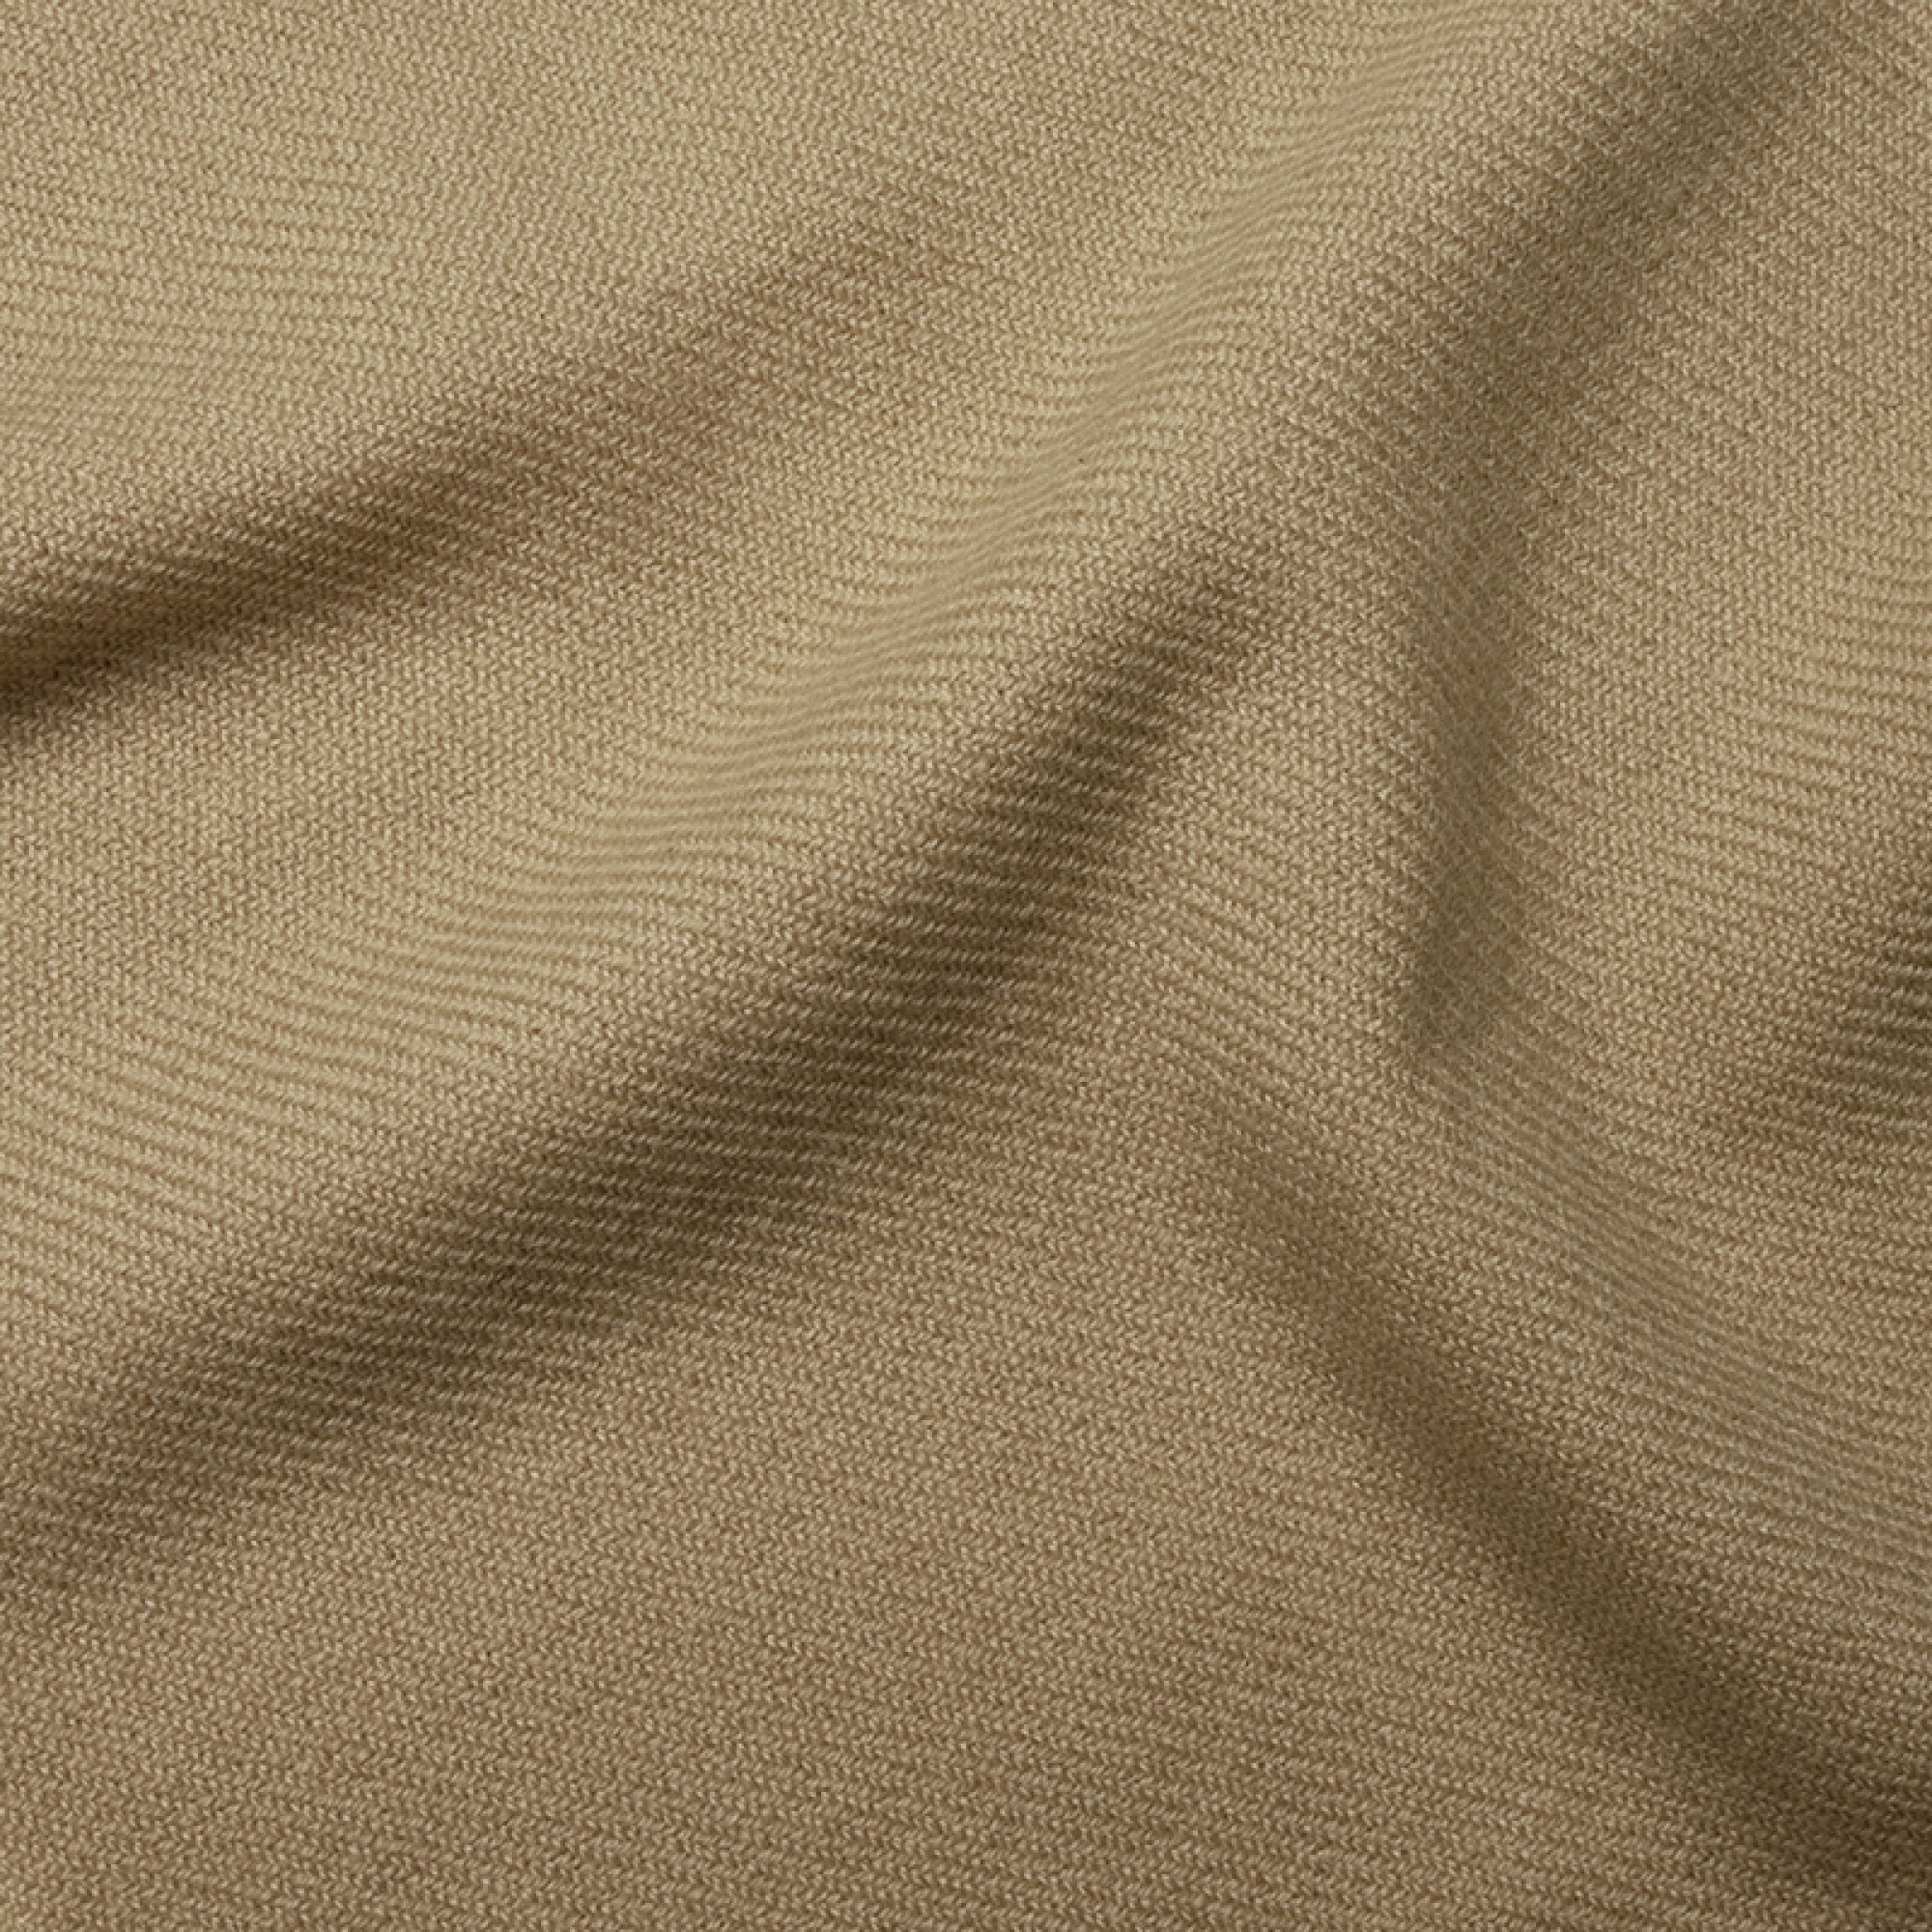 Cashmere accessories blanket toodoo plain xl 240 x 260 fawn 240 x 260 cm